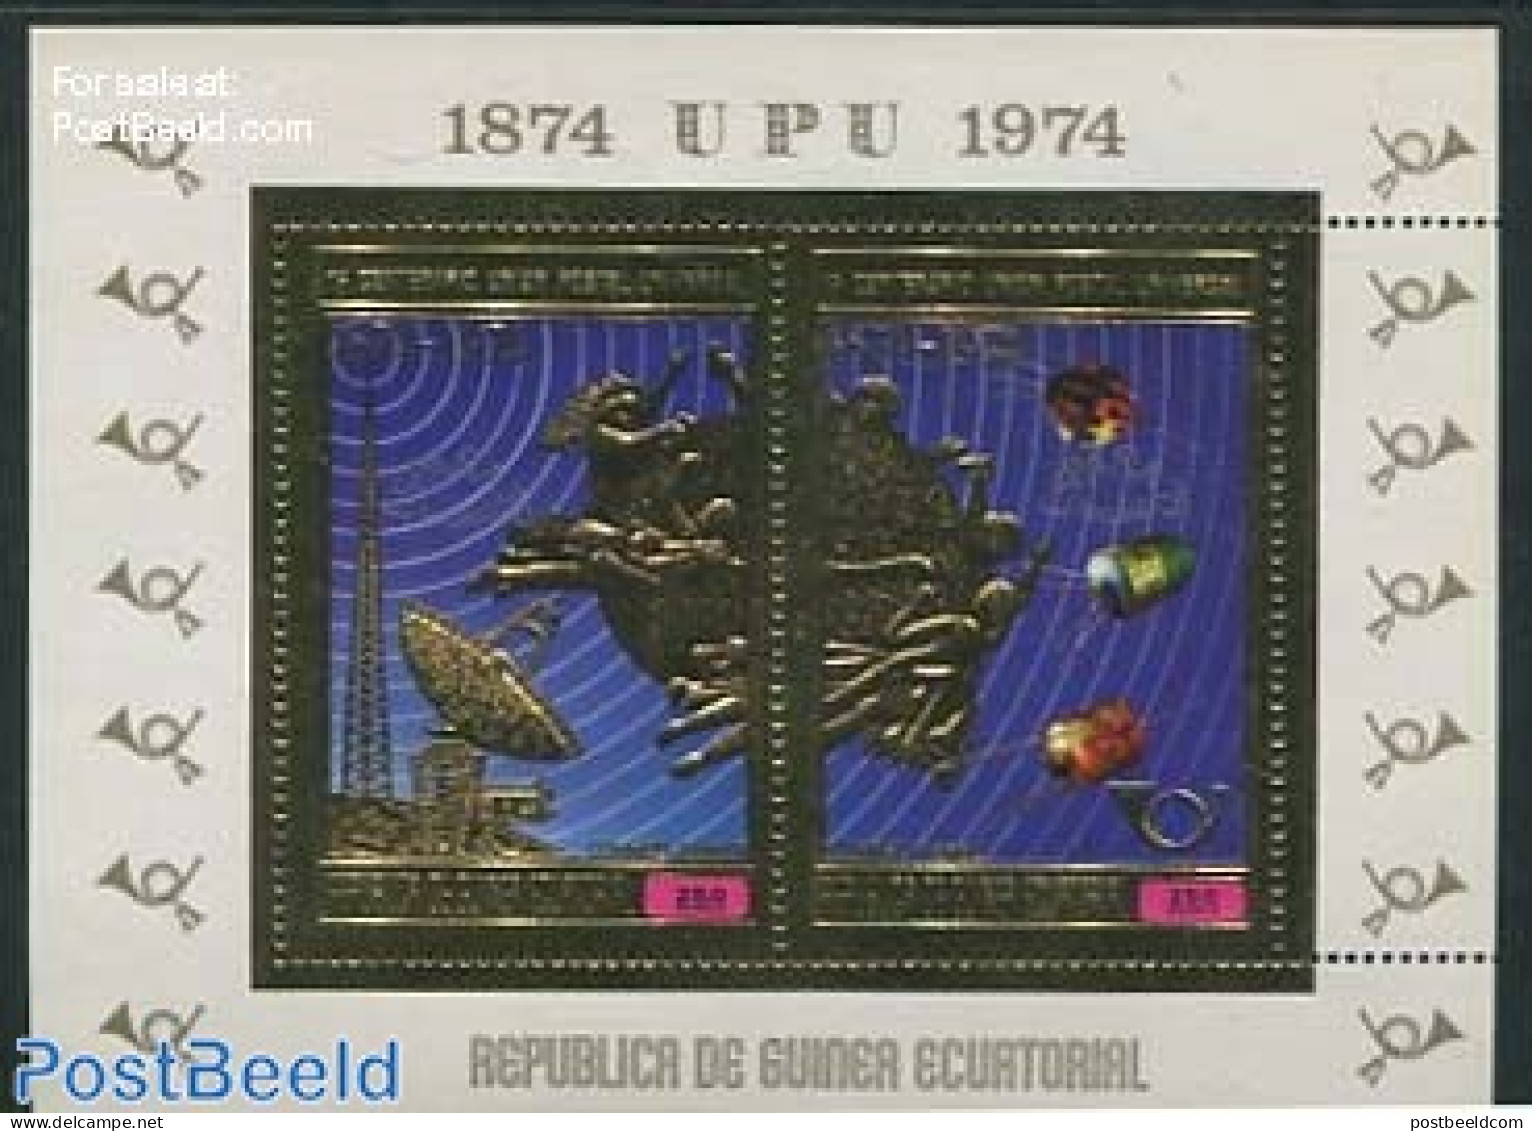 Equatorial Guinea 1974 UPU/ESPANA S/s, Mint NH, Science - Transport - Telecommunication - U.P.U. - Space Exploration - Telecom